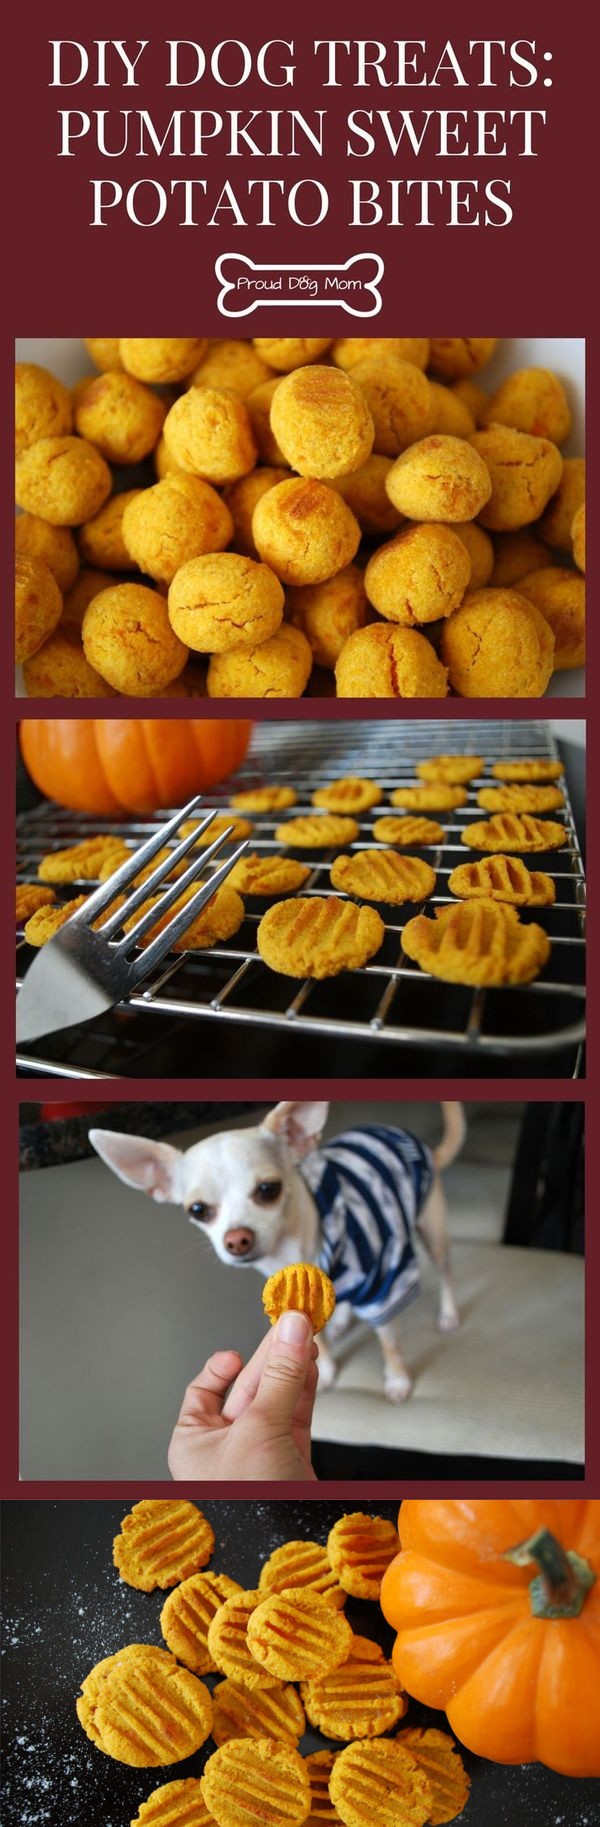 DIY Dog Treats: Pumpkin Sweet Potato Bites